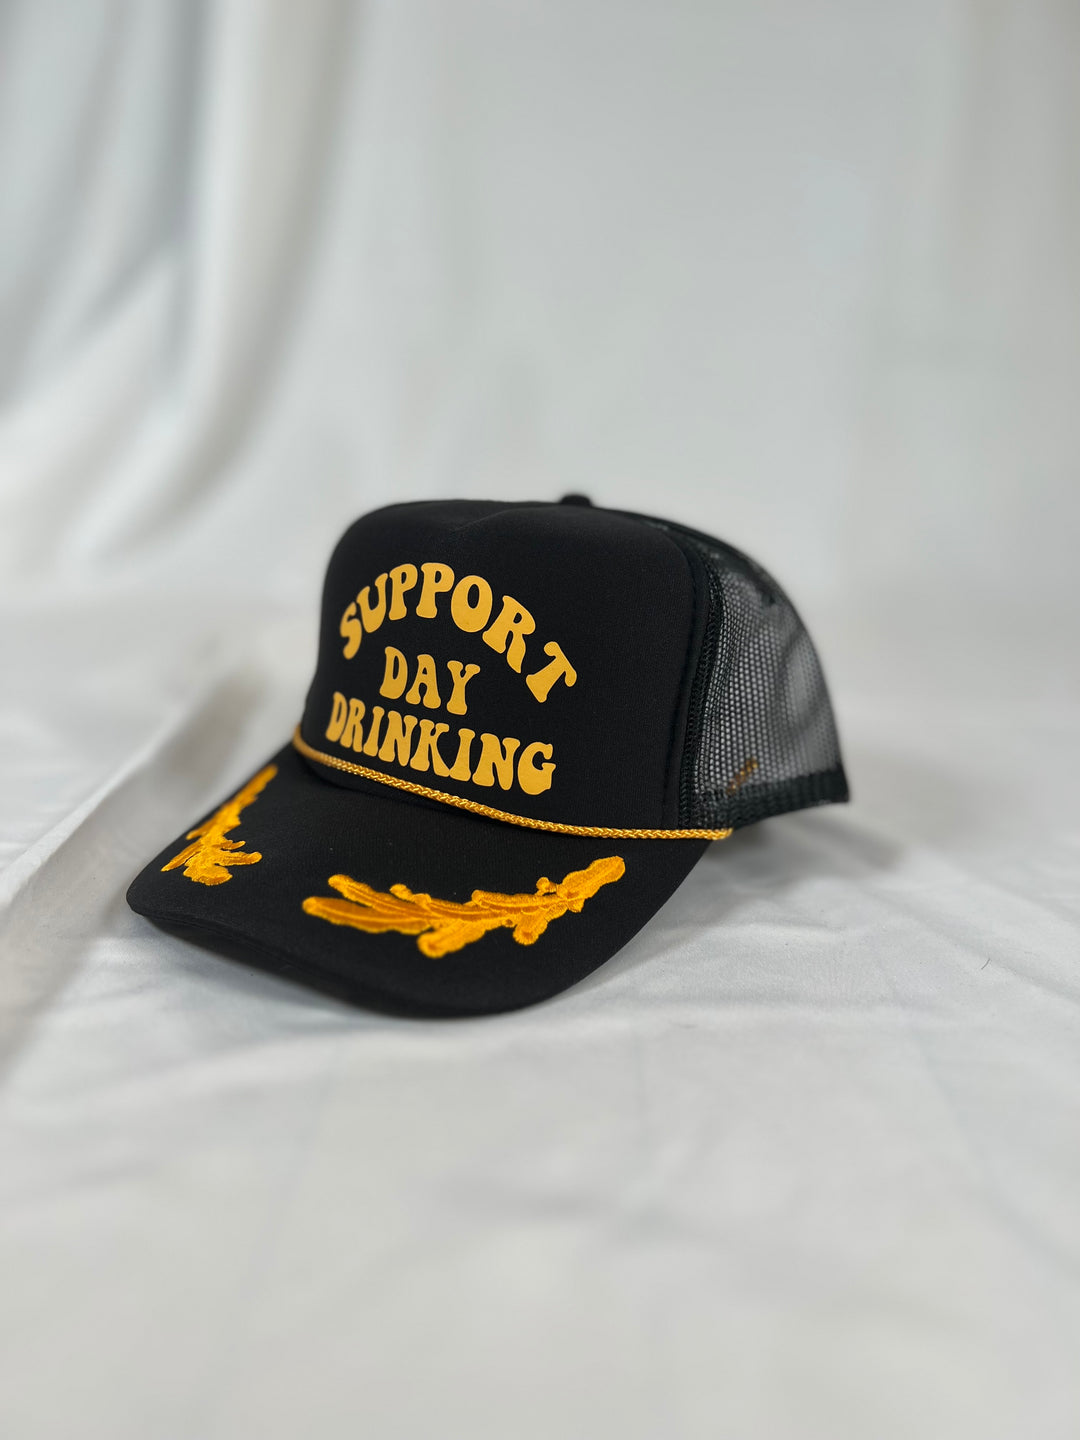 Support Day Drinking Trucker Hat - Captain Hat